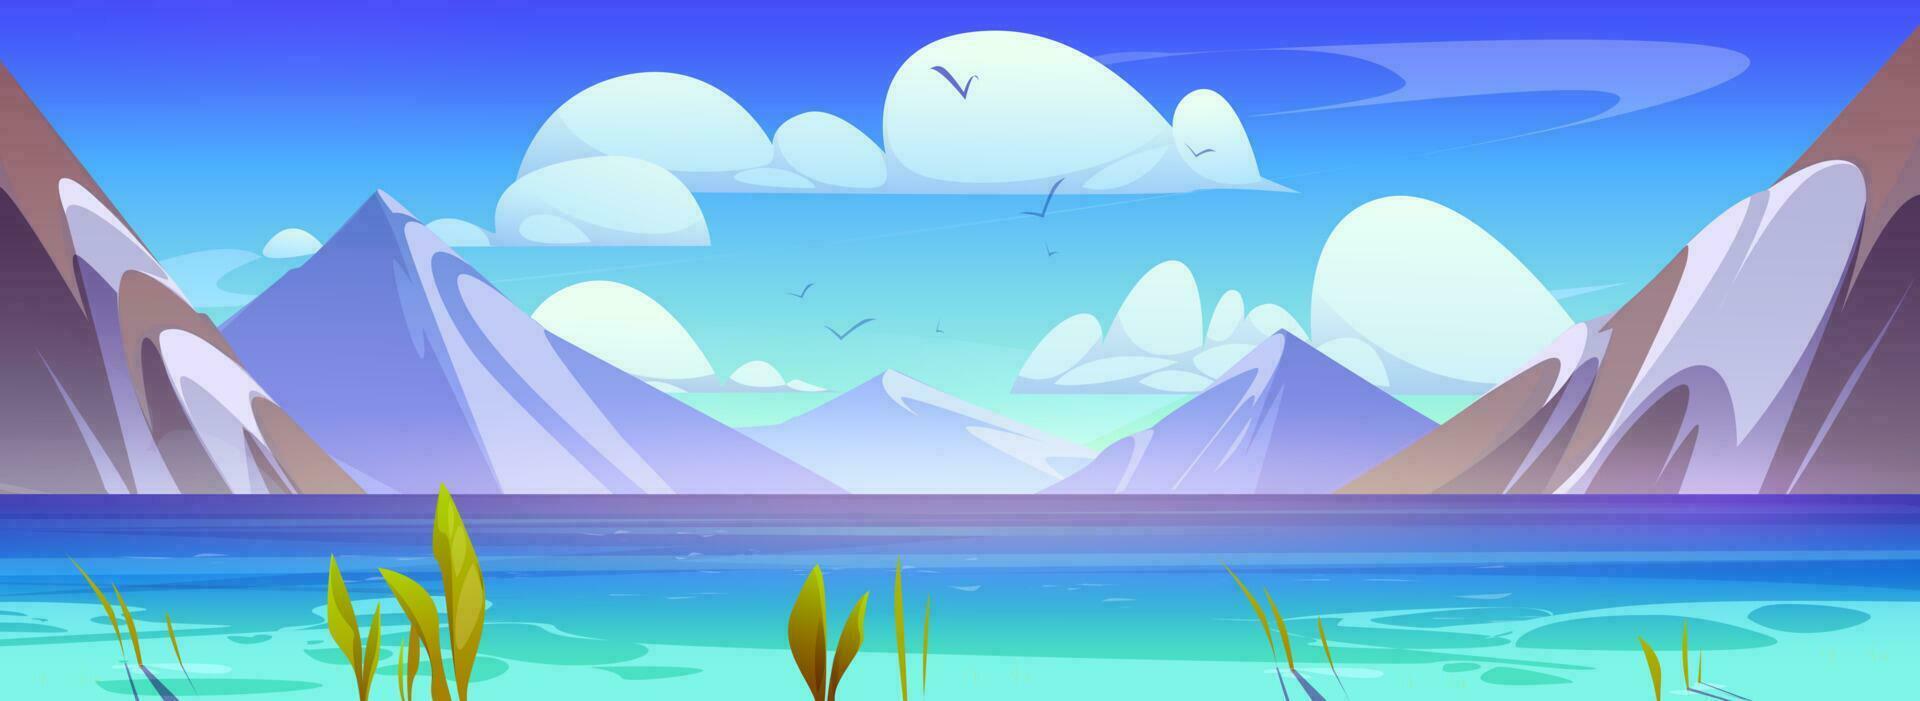 Meer Himmel mit Berg Aussicht Karikatur Illustration vektor